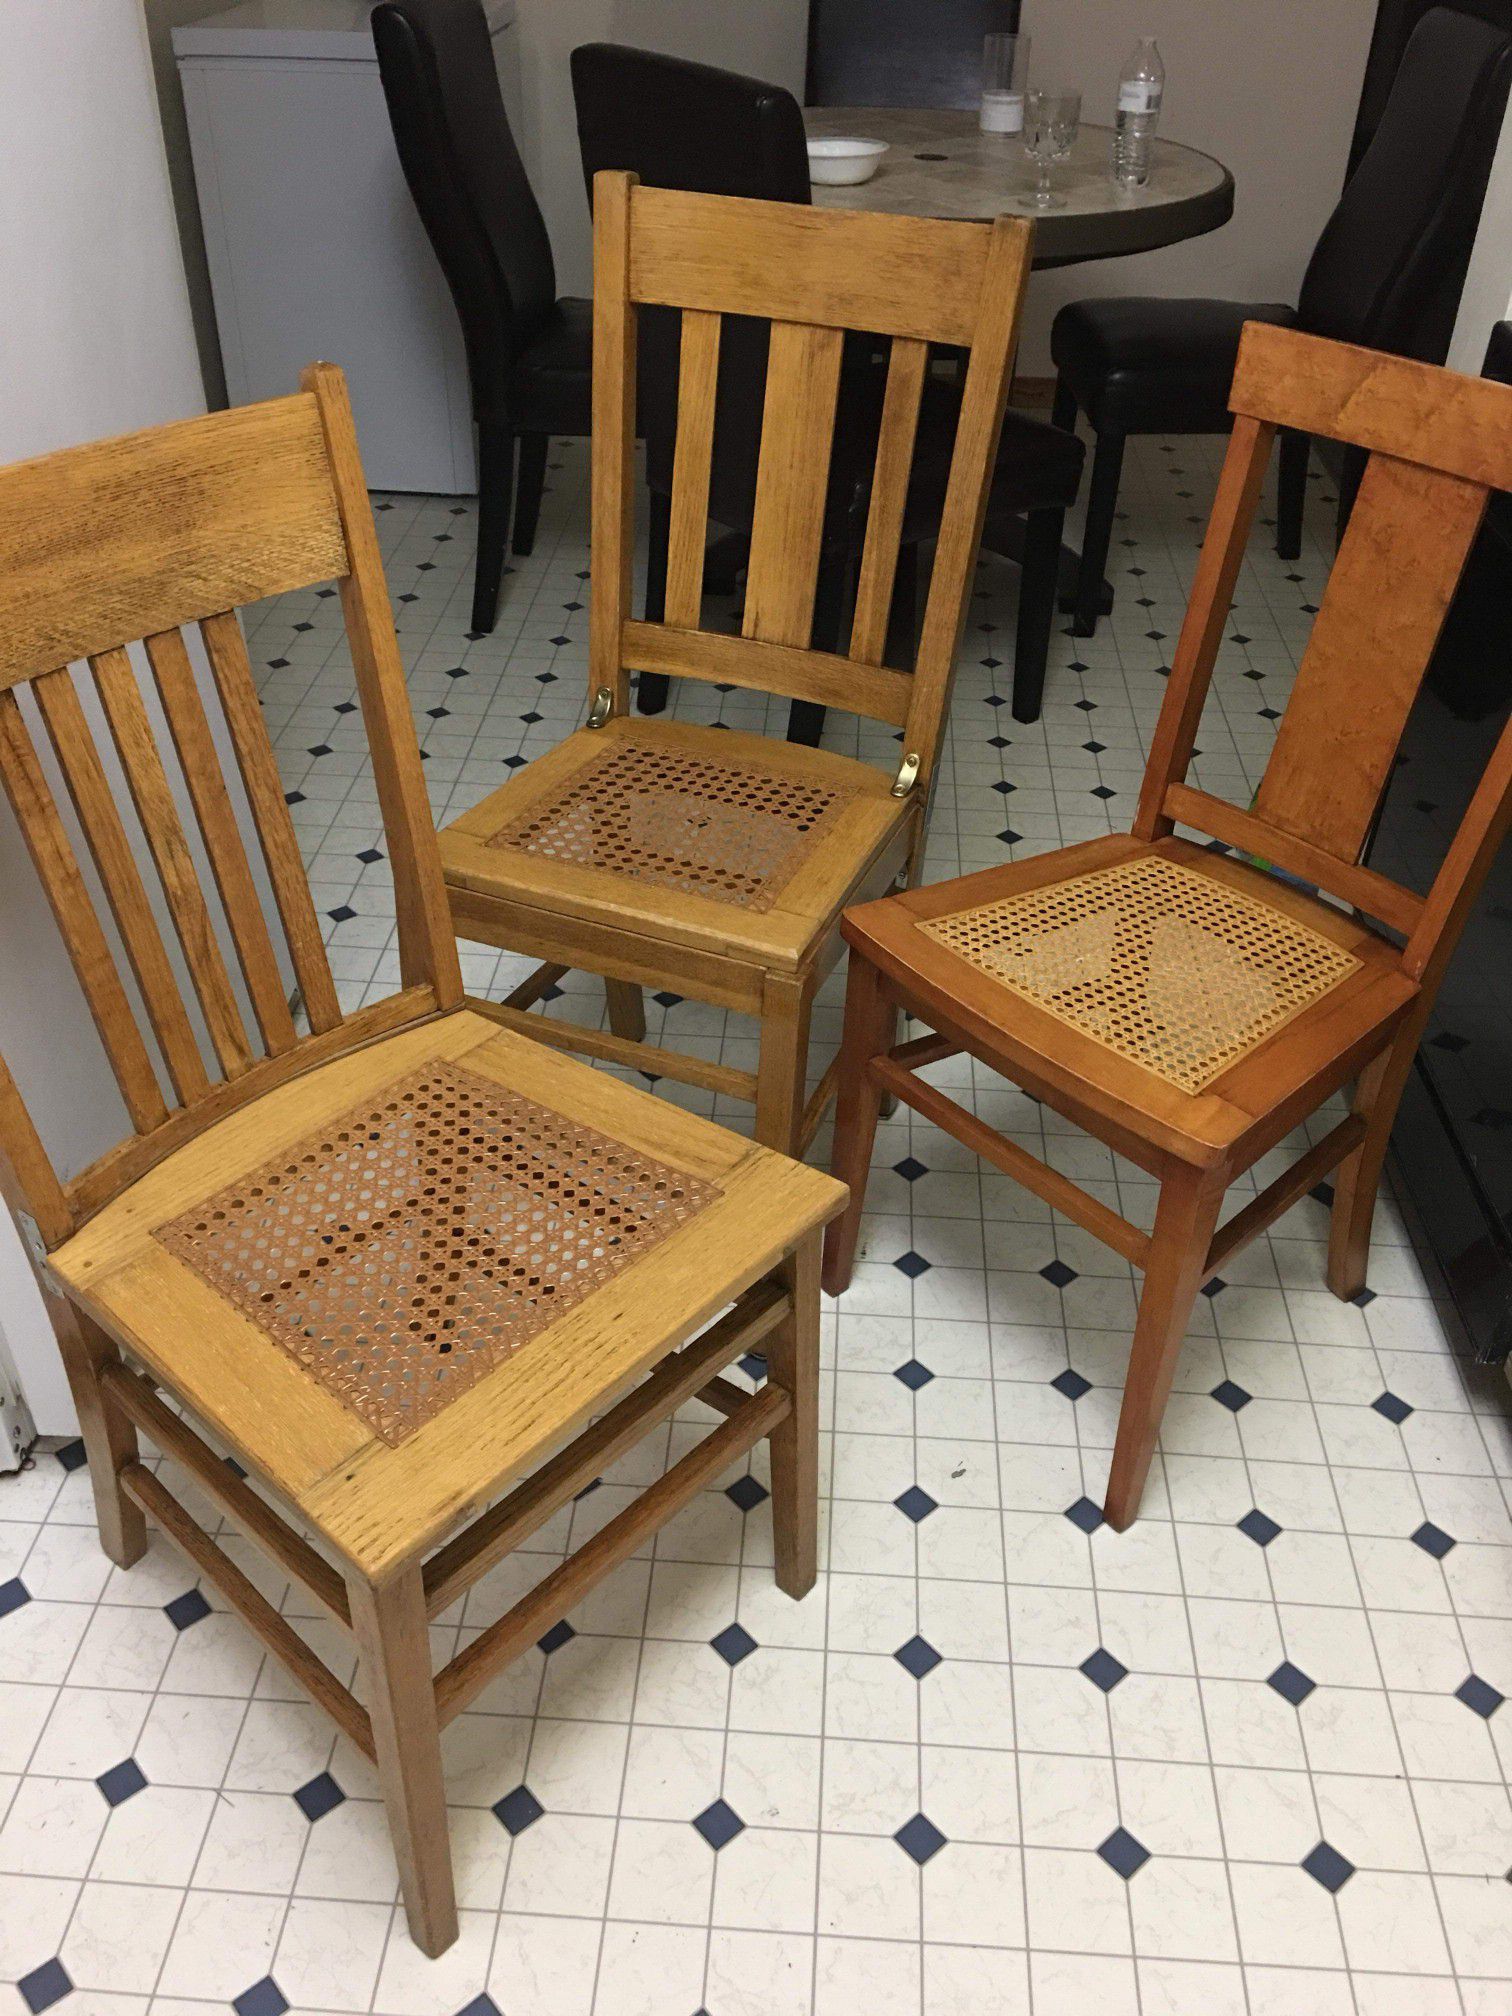 3 wood chairs like new